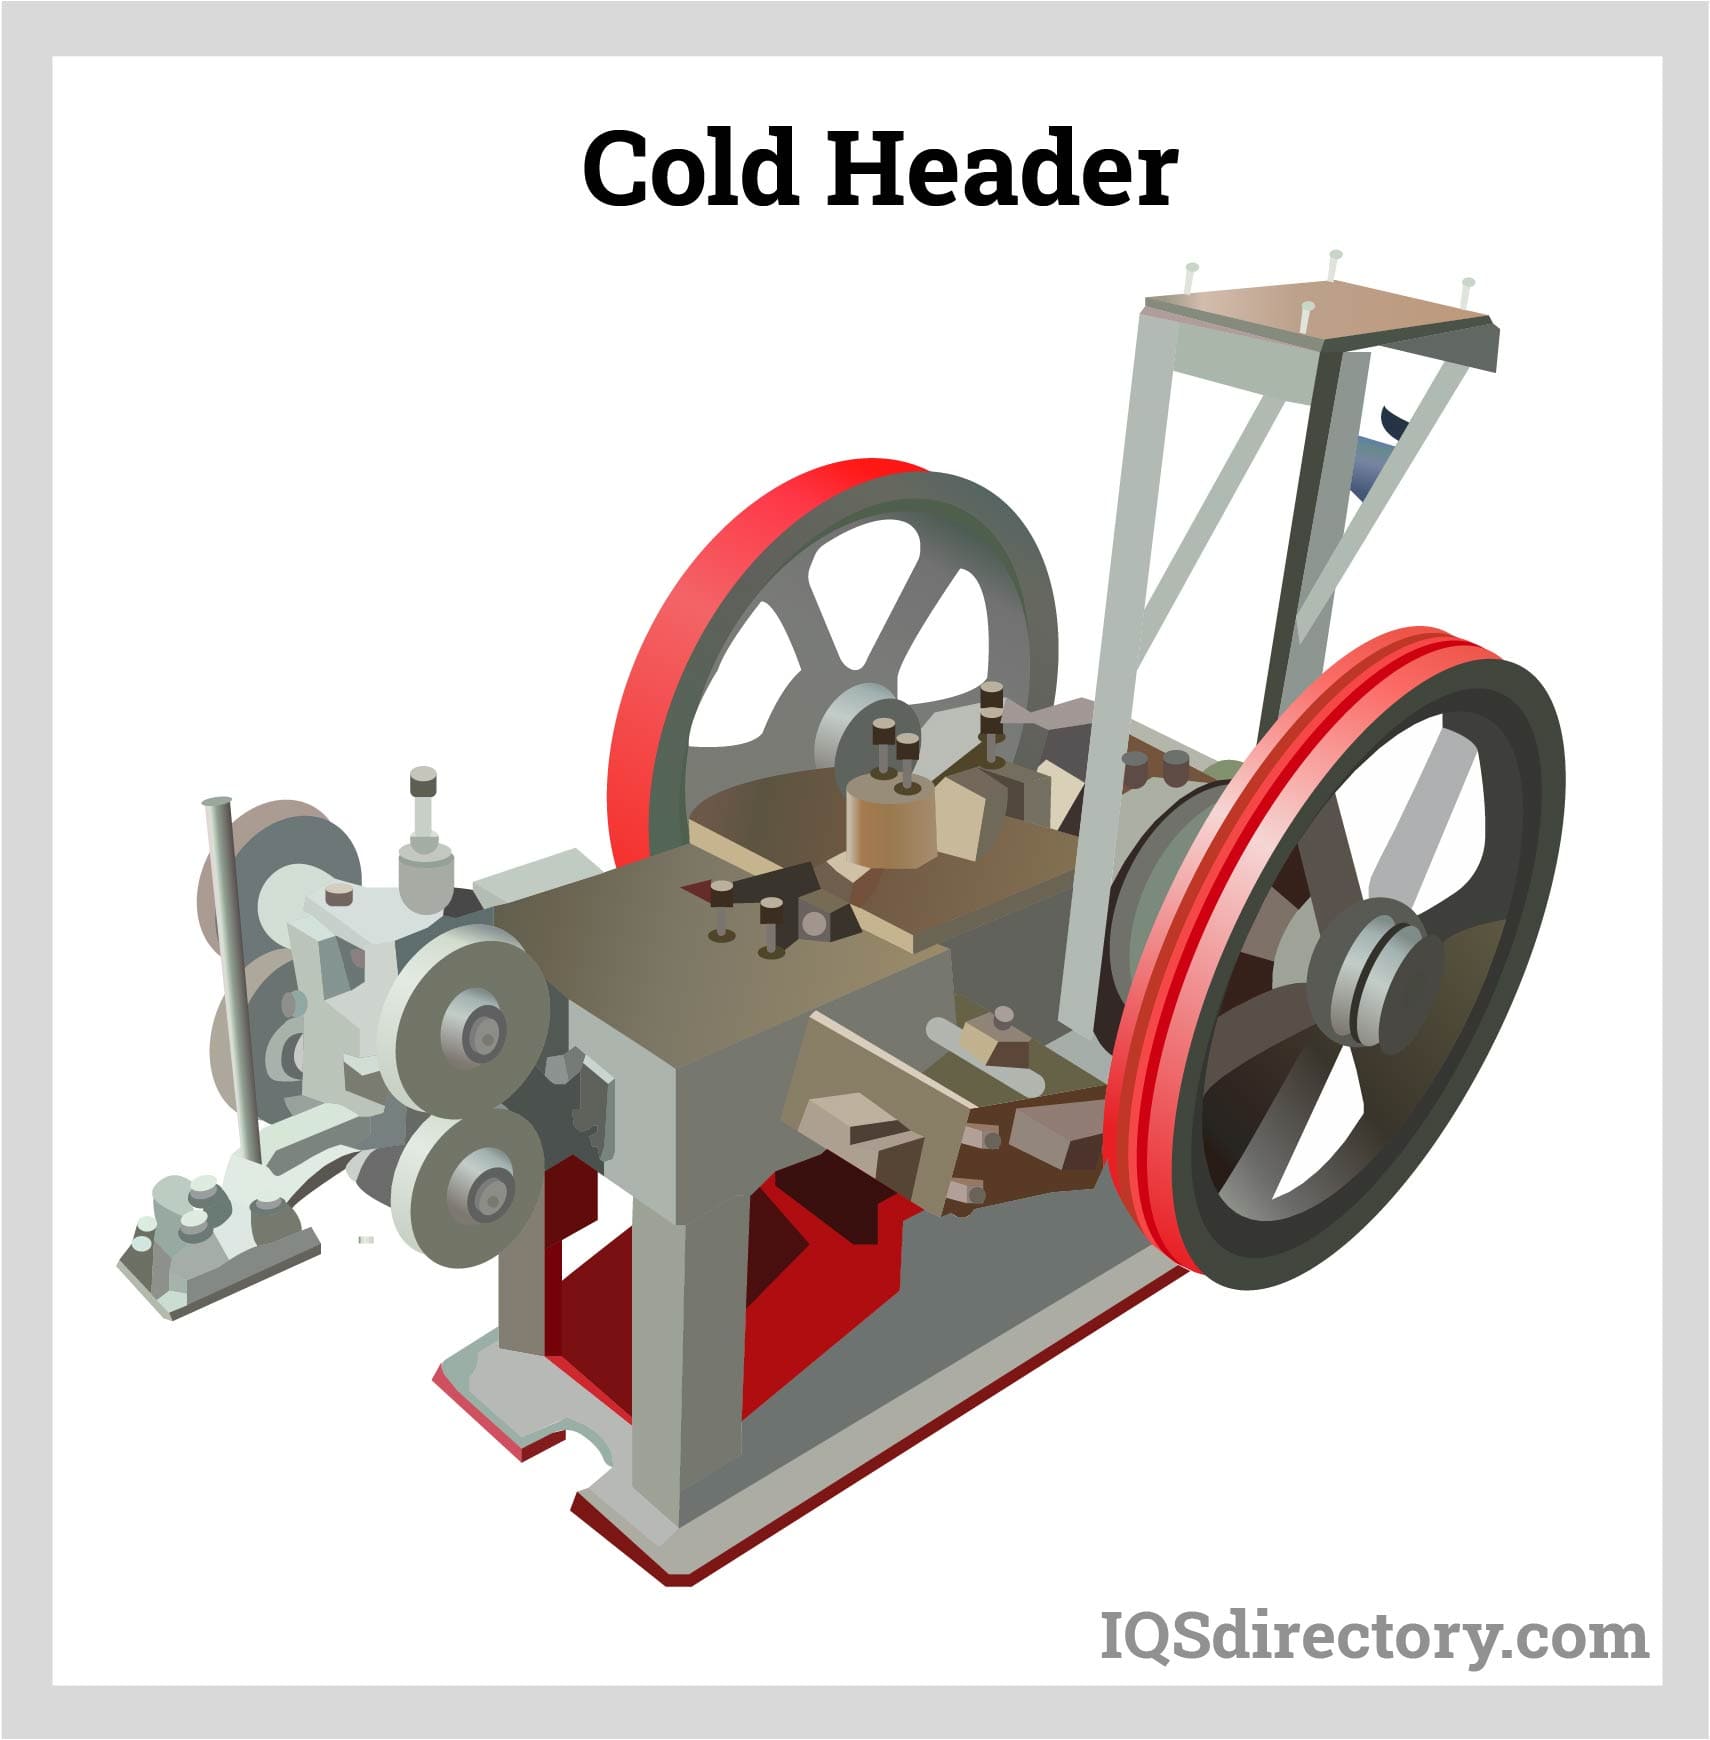 Cold Header